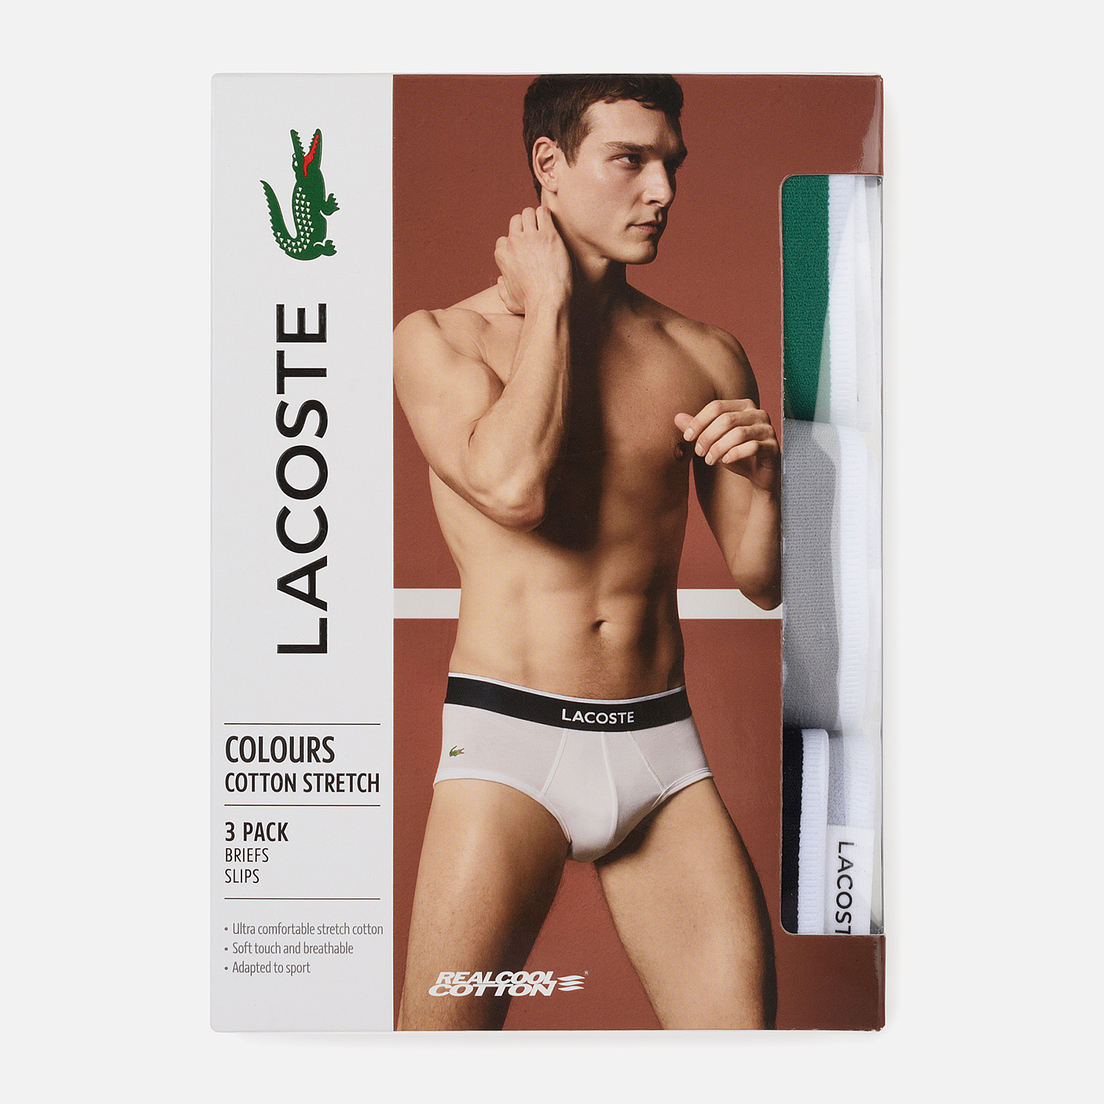 Lacoste Underwear Комплект мужских трусов 3-Pack Briefs